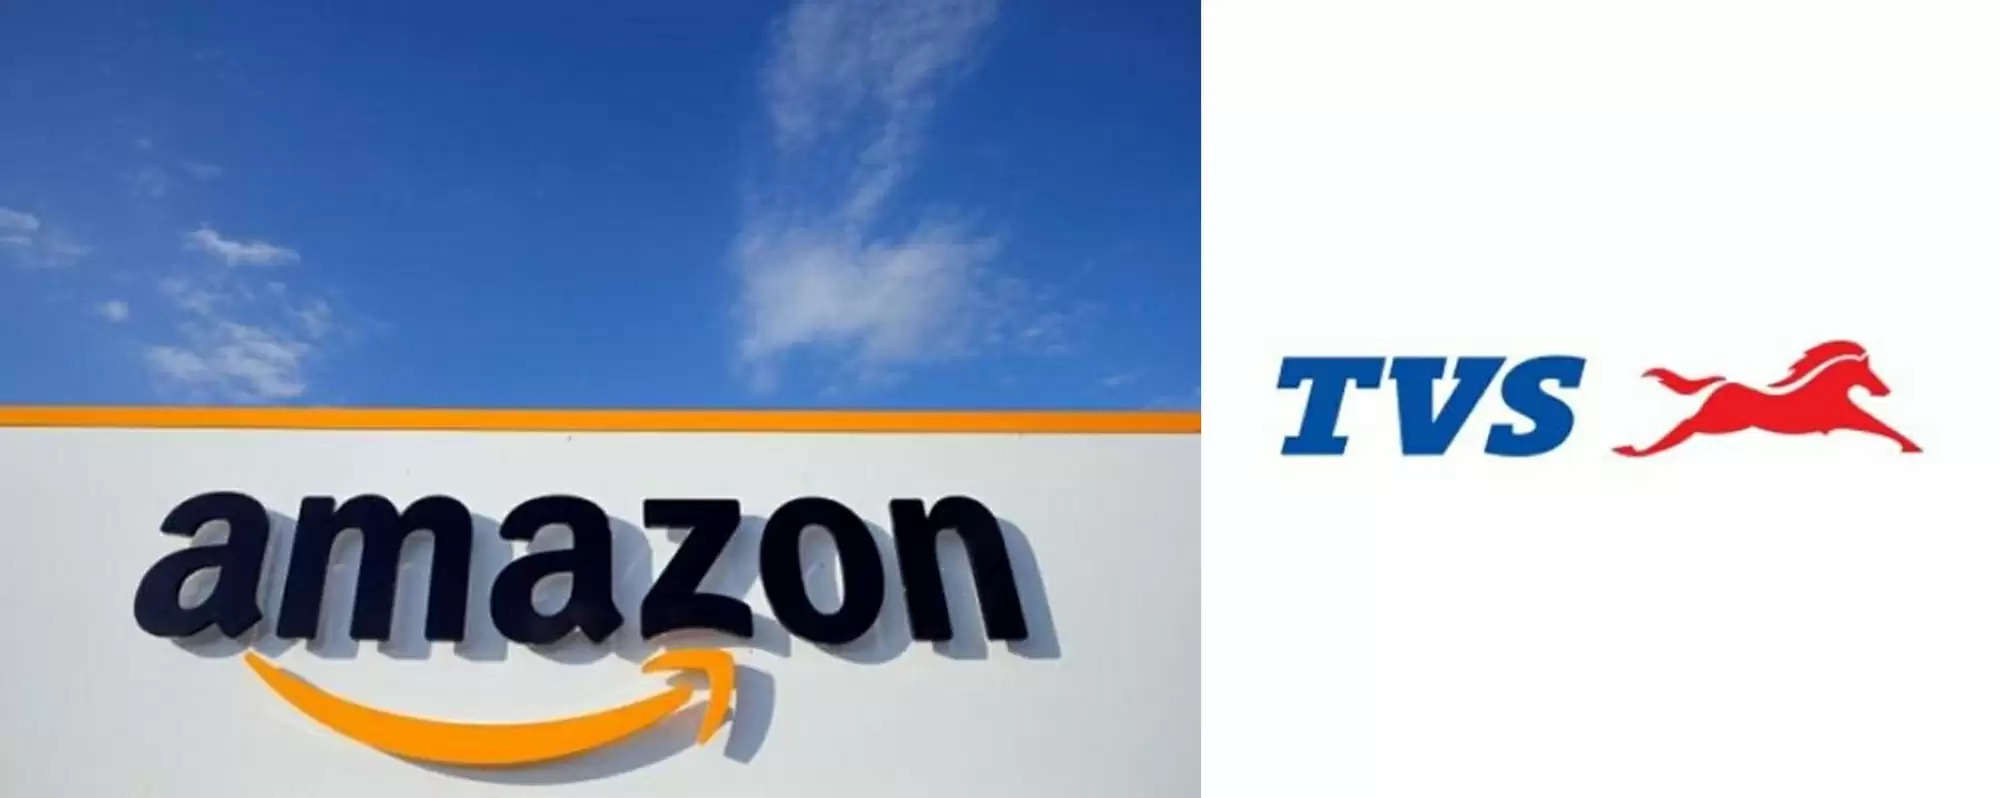 Amazon joins TVS Motor Company